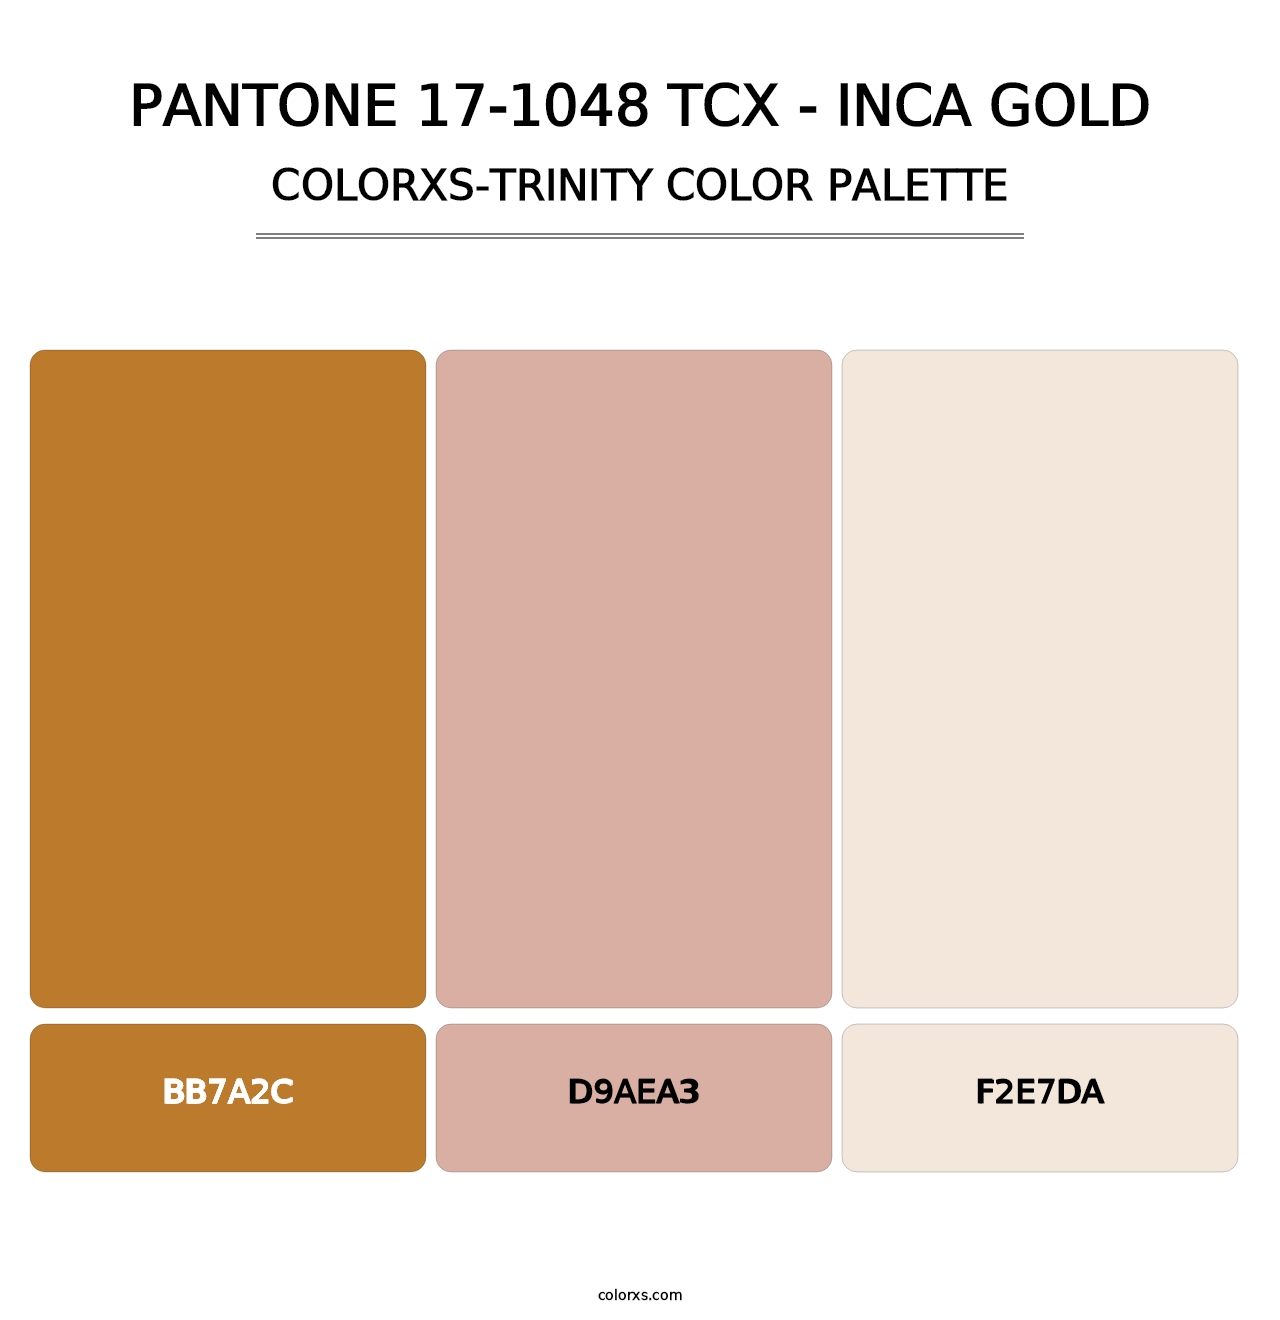 PANTONE 17-1048 TCX - Inca Gold - Colorxs Trinity Palette